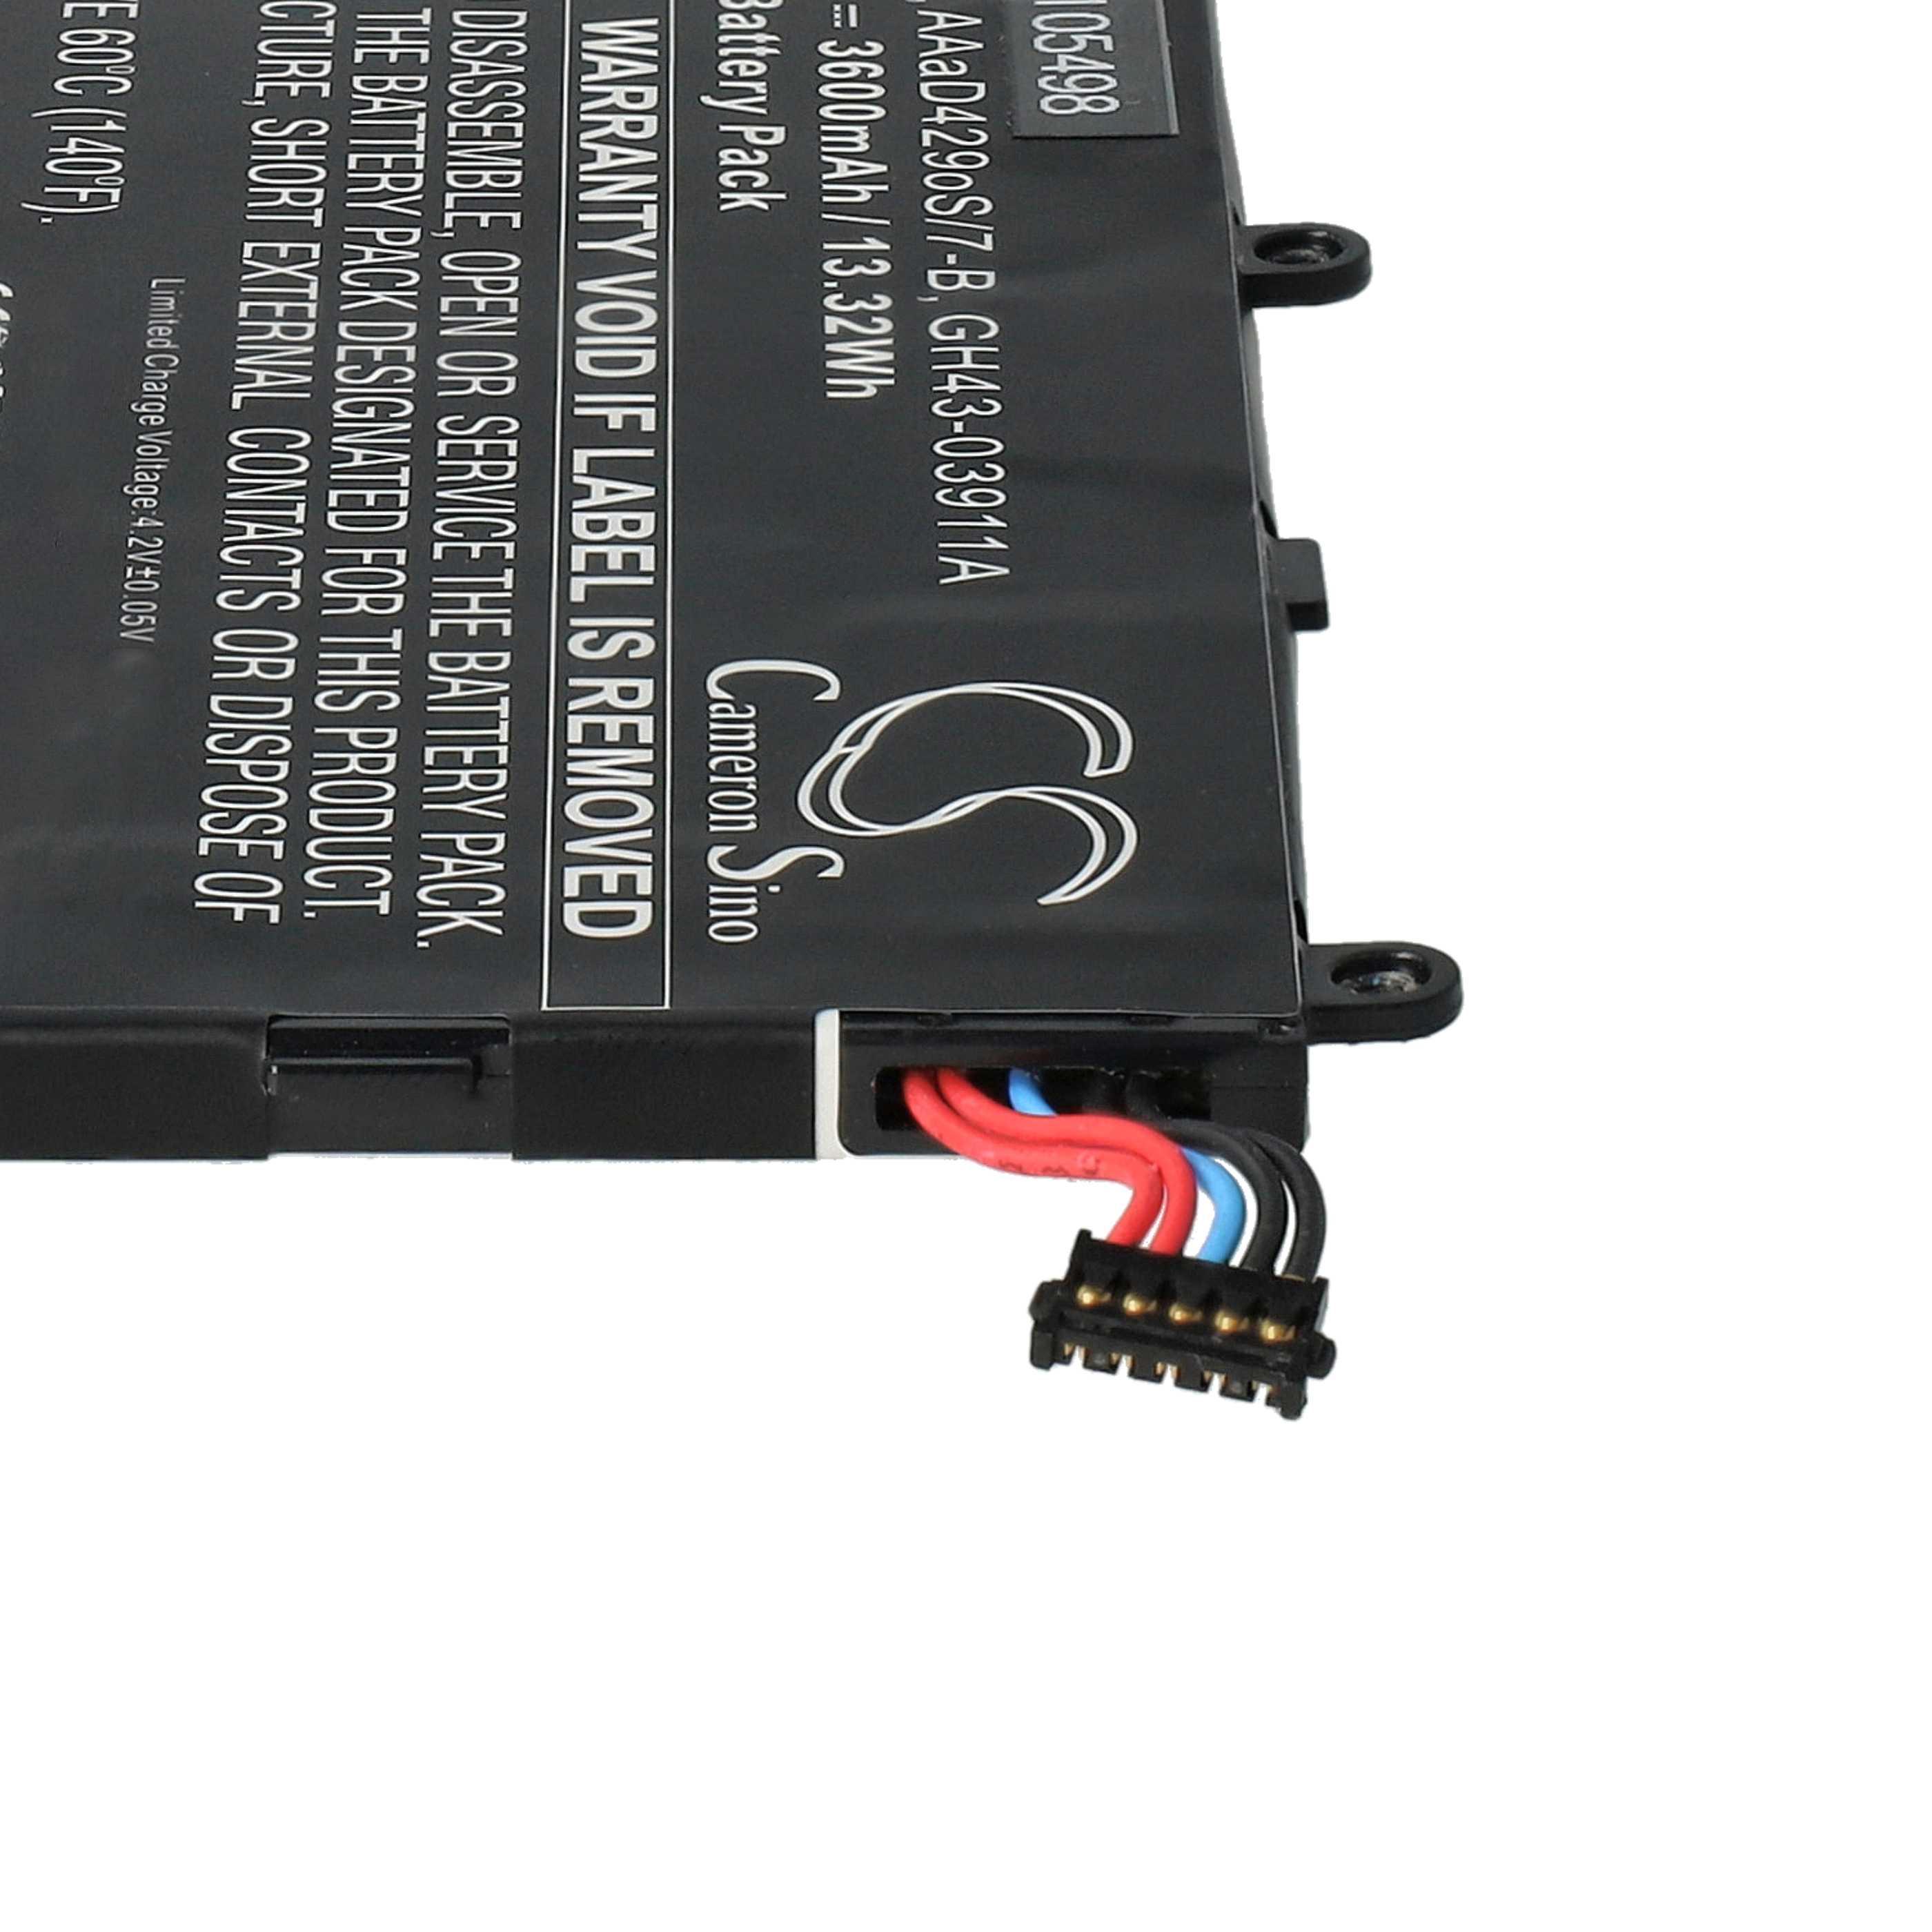 Akumulator zamiennik Samsung AAaD429oS/7-B, T4000E - 3600 mAh 3,7 V LiPo